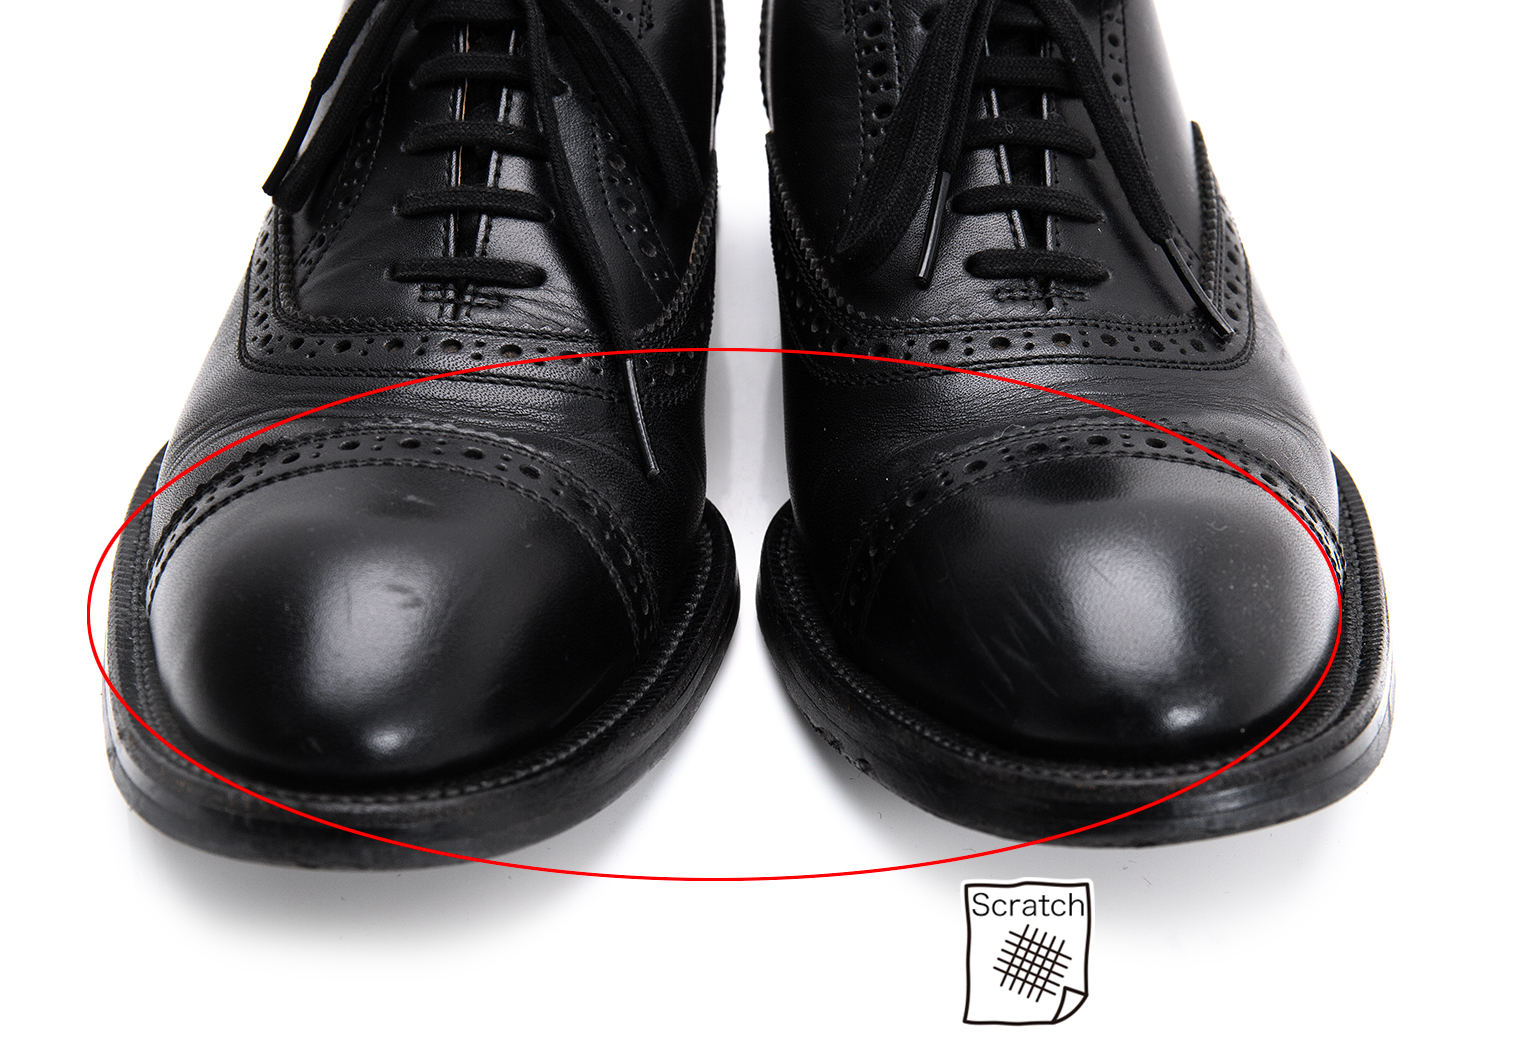 taoコムデギャルソン定番タッセルシューズ黒24.5靴裏の減りも僅かです - 靴